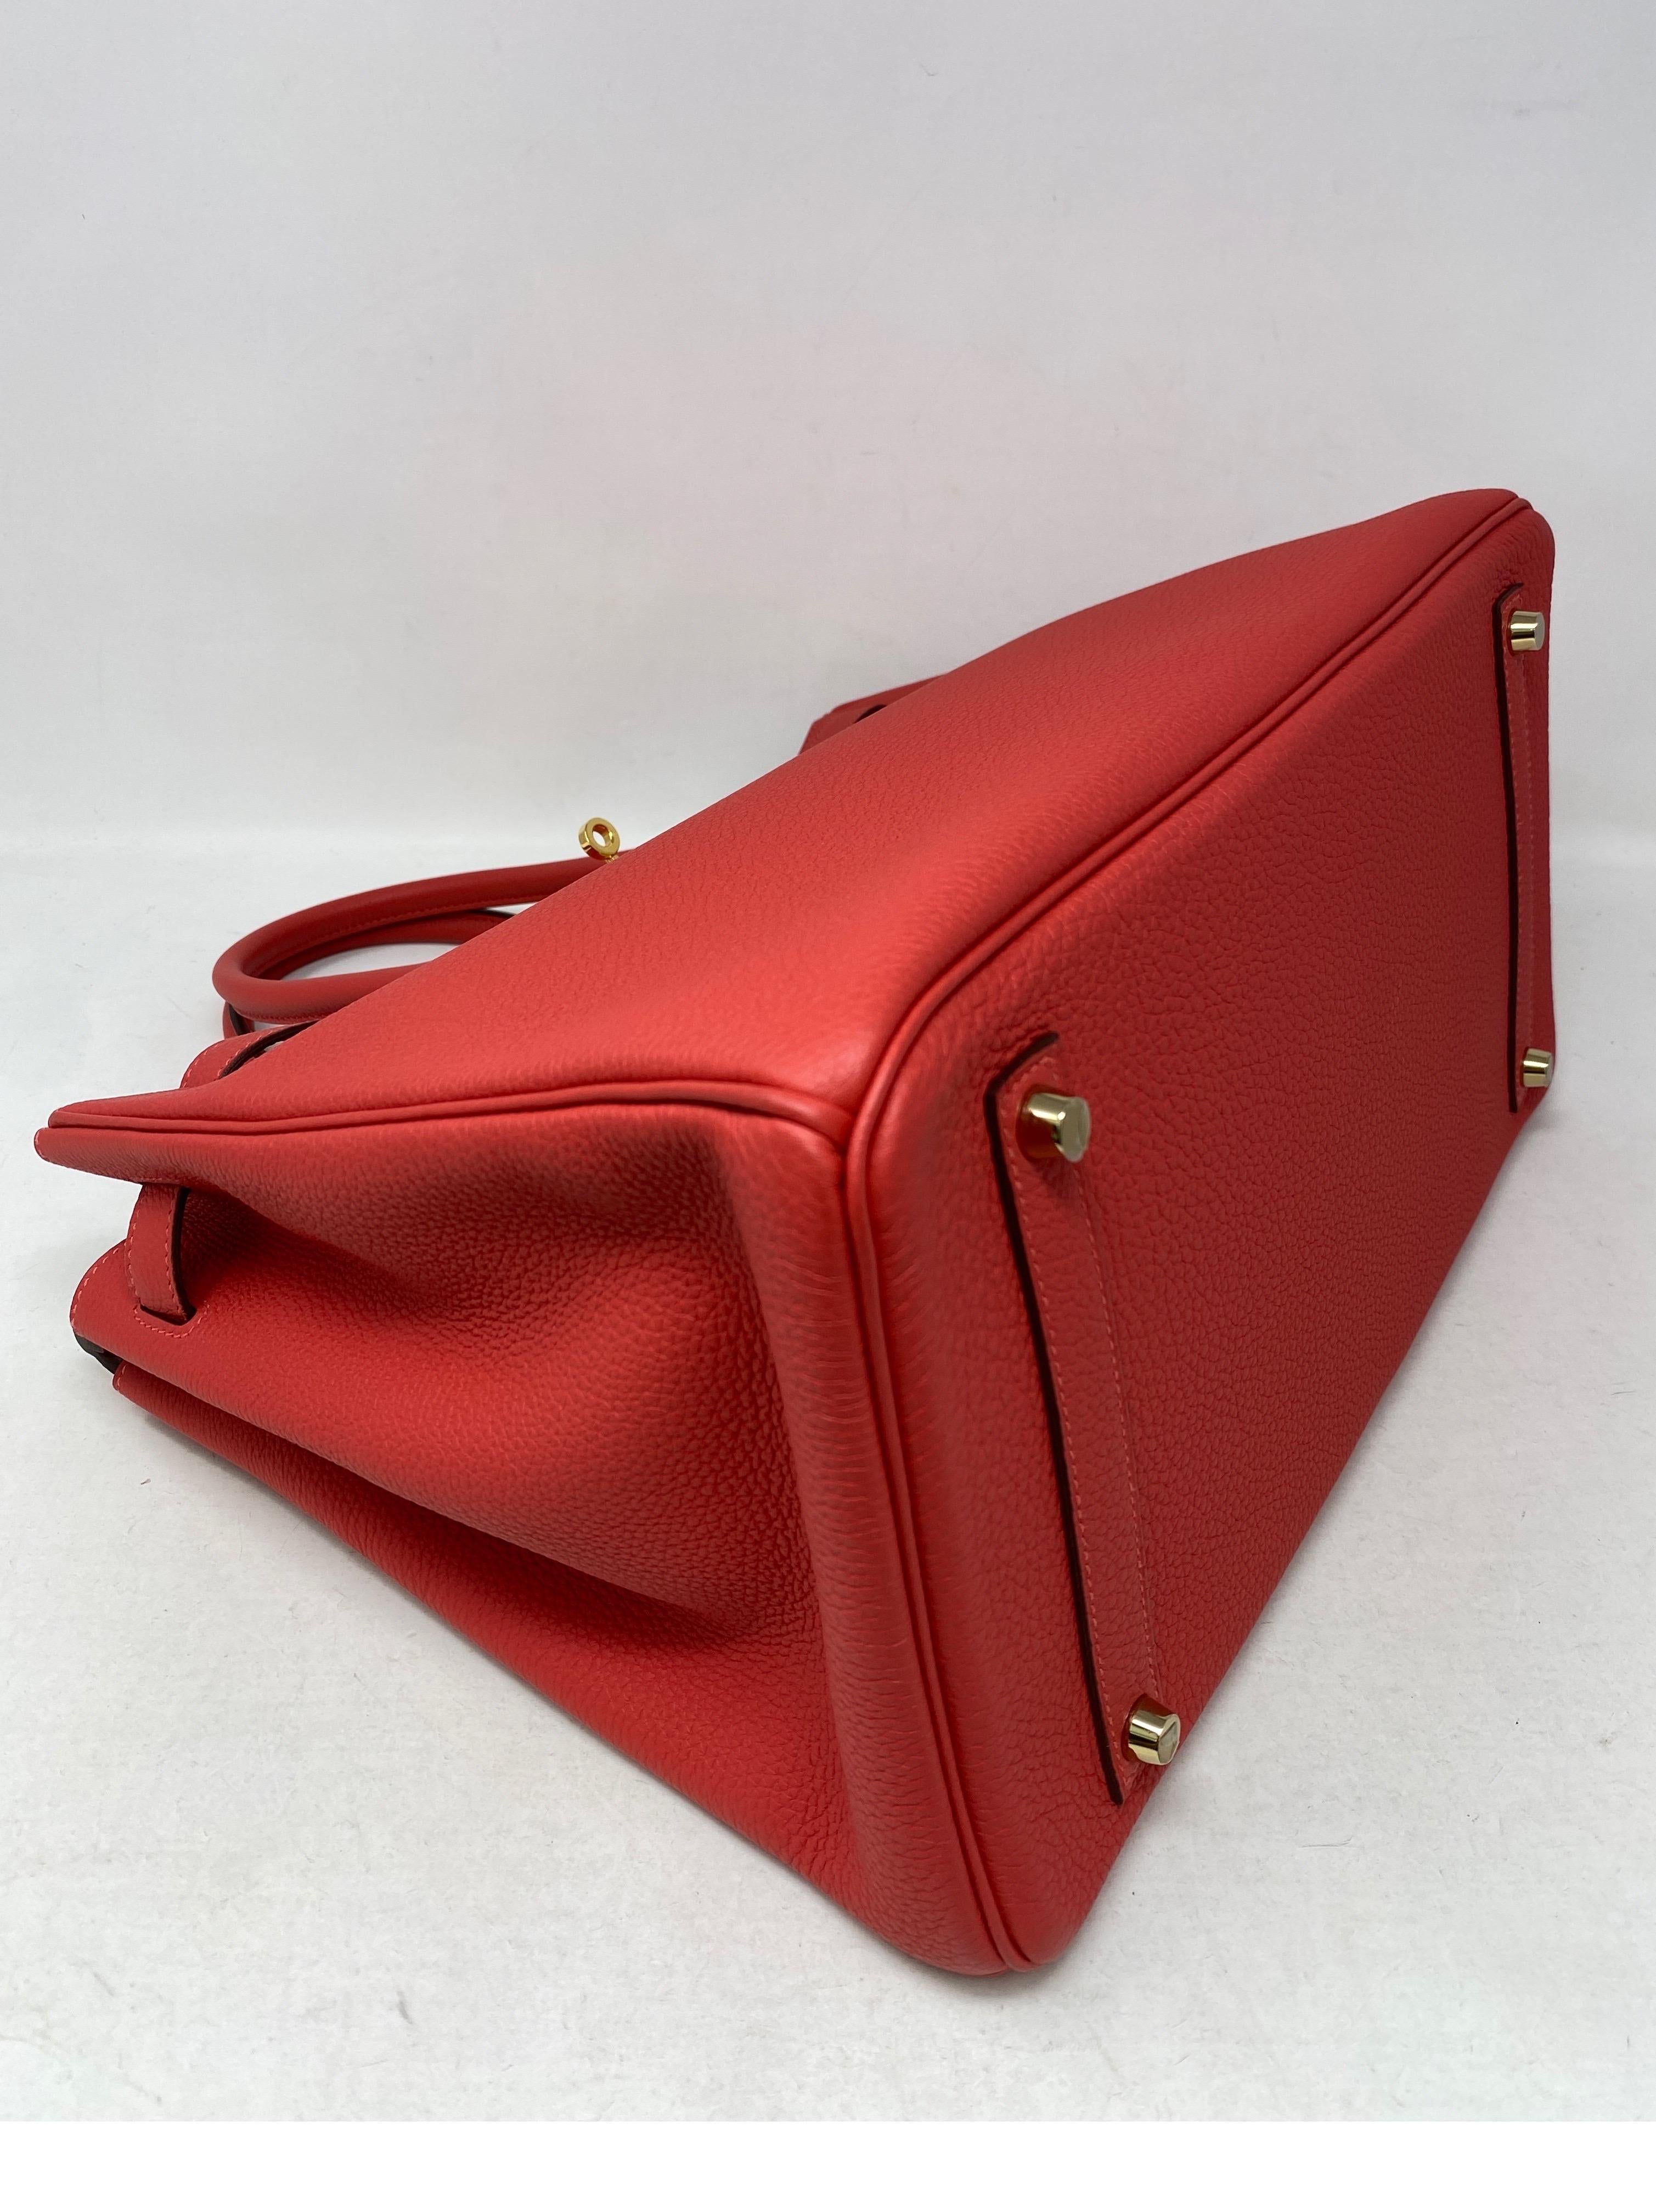 Hermes Birkin 35 Rouge Pivoine Bag 2